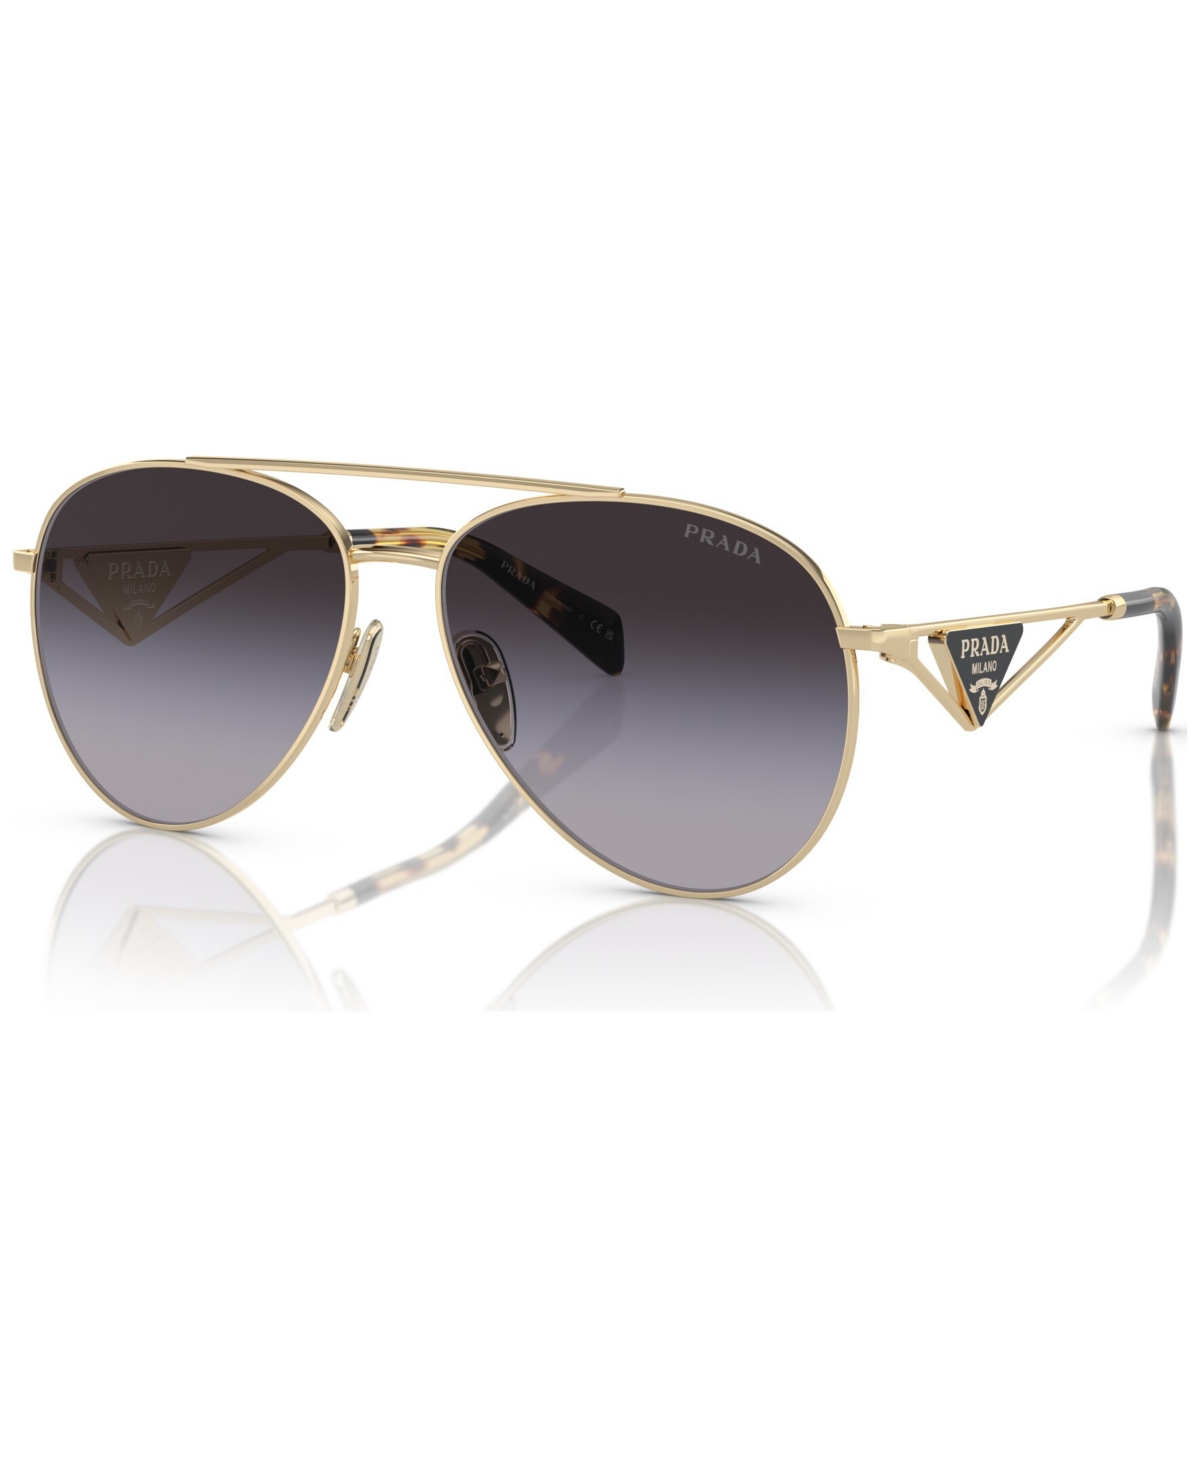 Prada Woman Sunglasses Pr 73zs In Grey Gradient